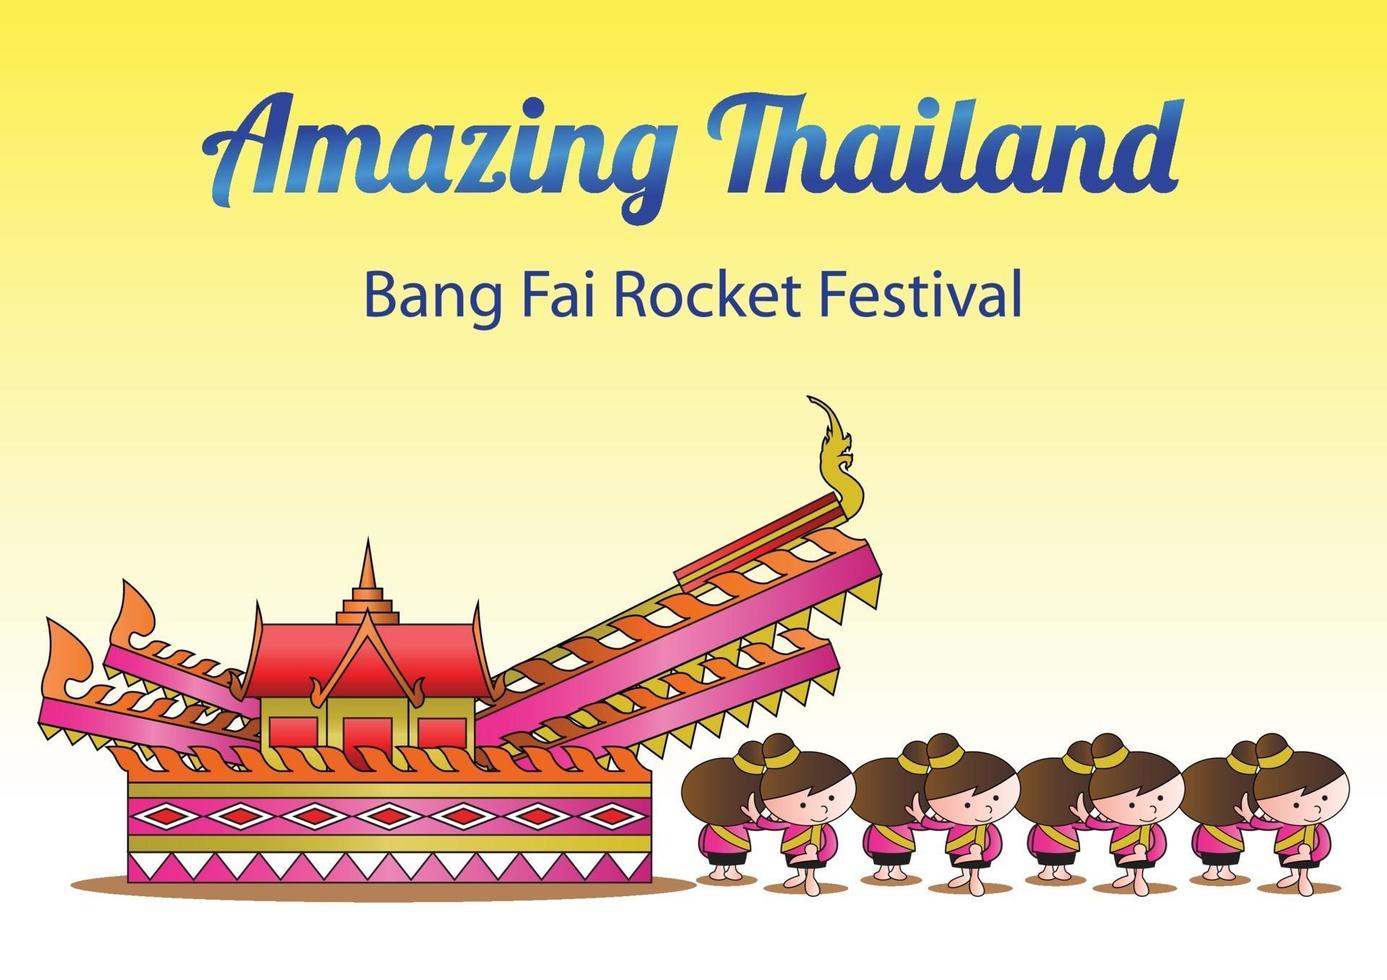 desfile del festival bang fai rocket vector